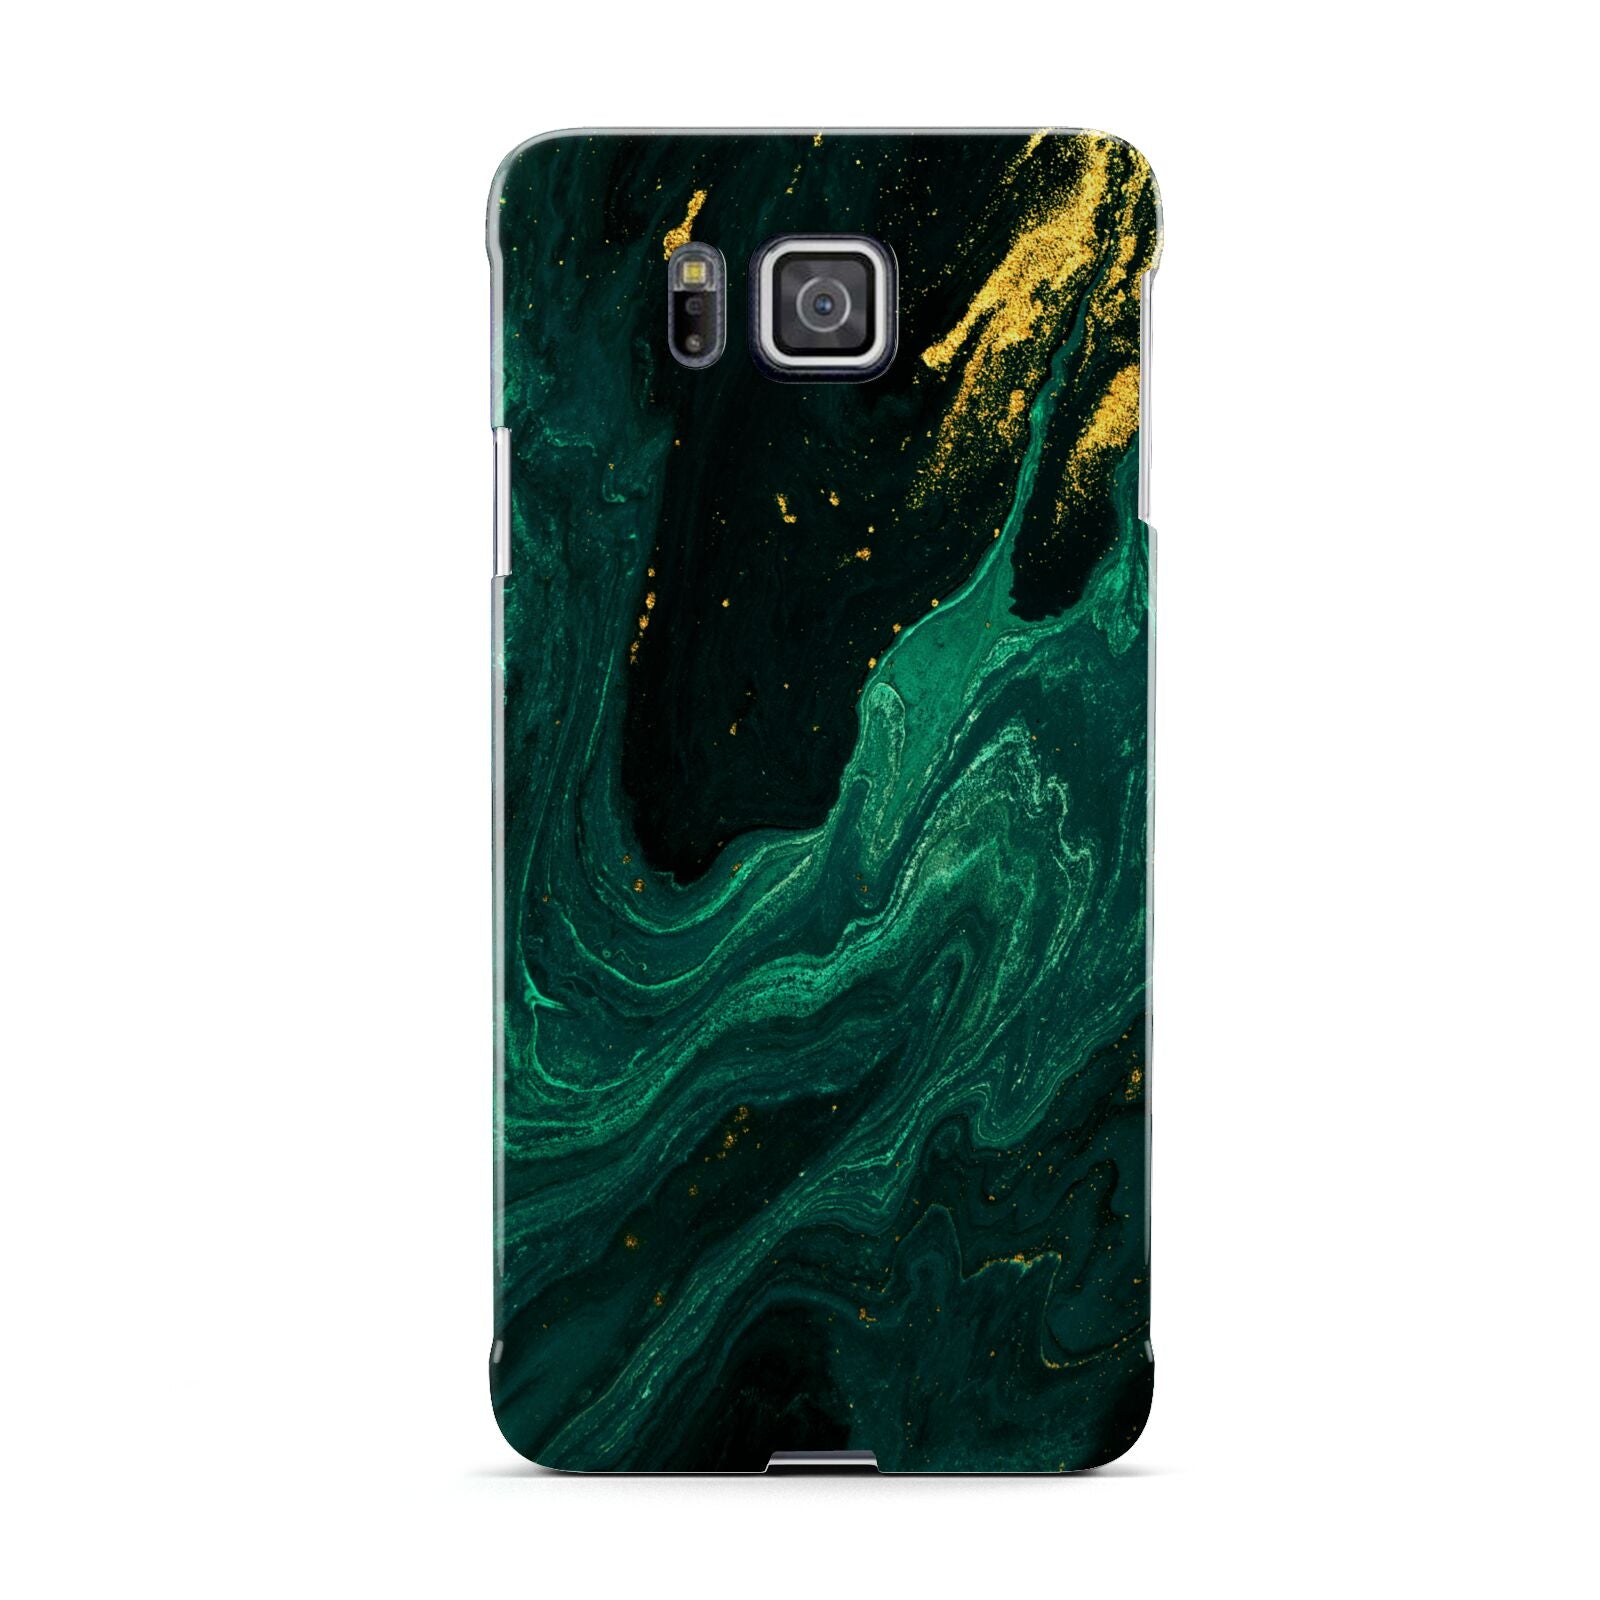 Emerald Green Samsung Galaxy Alpha Case